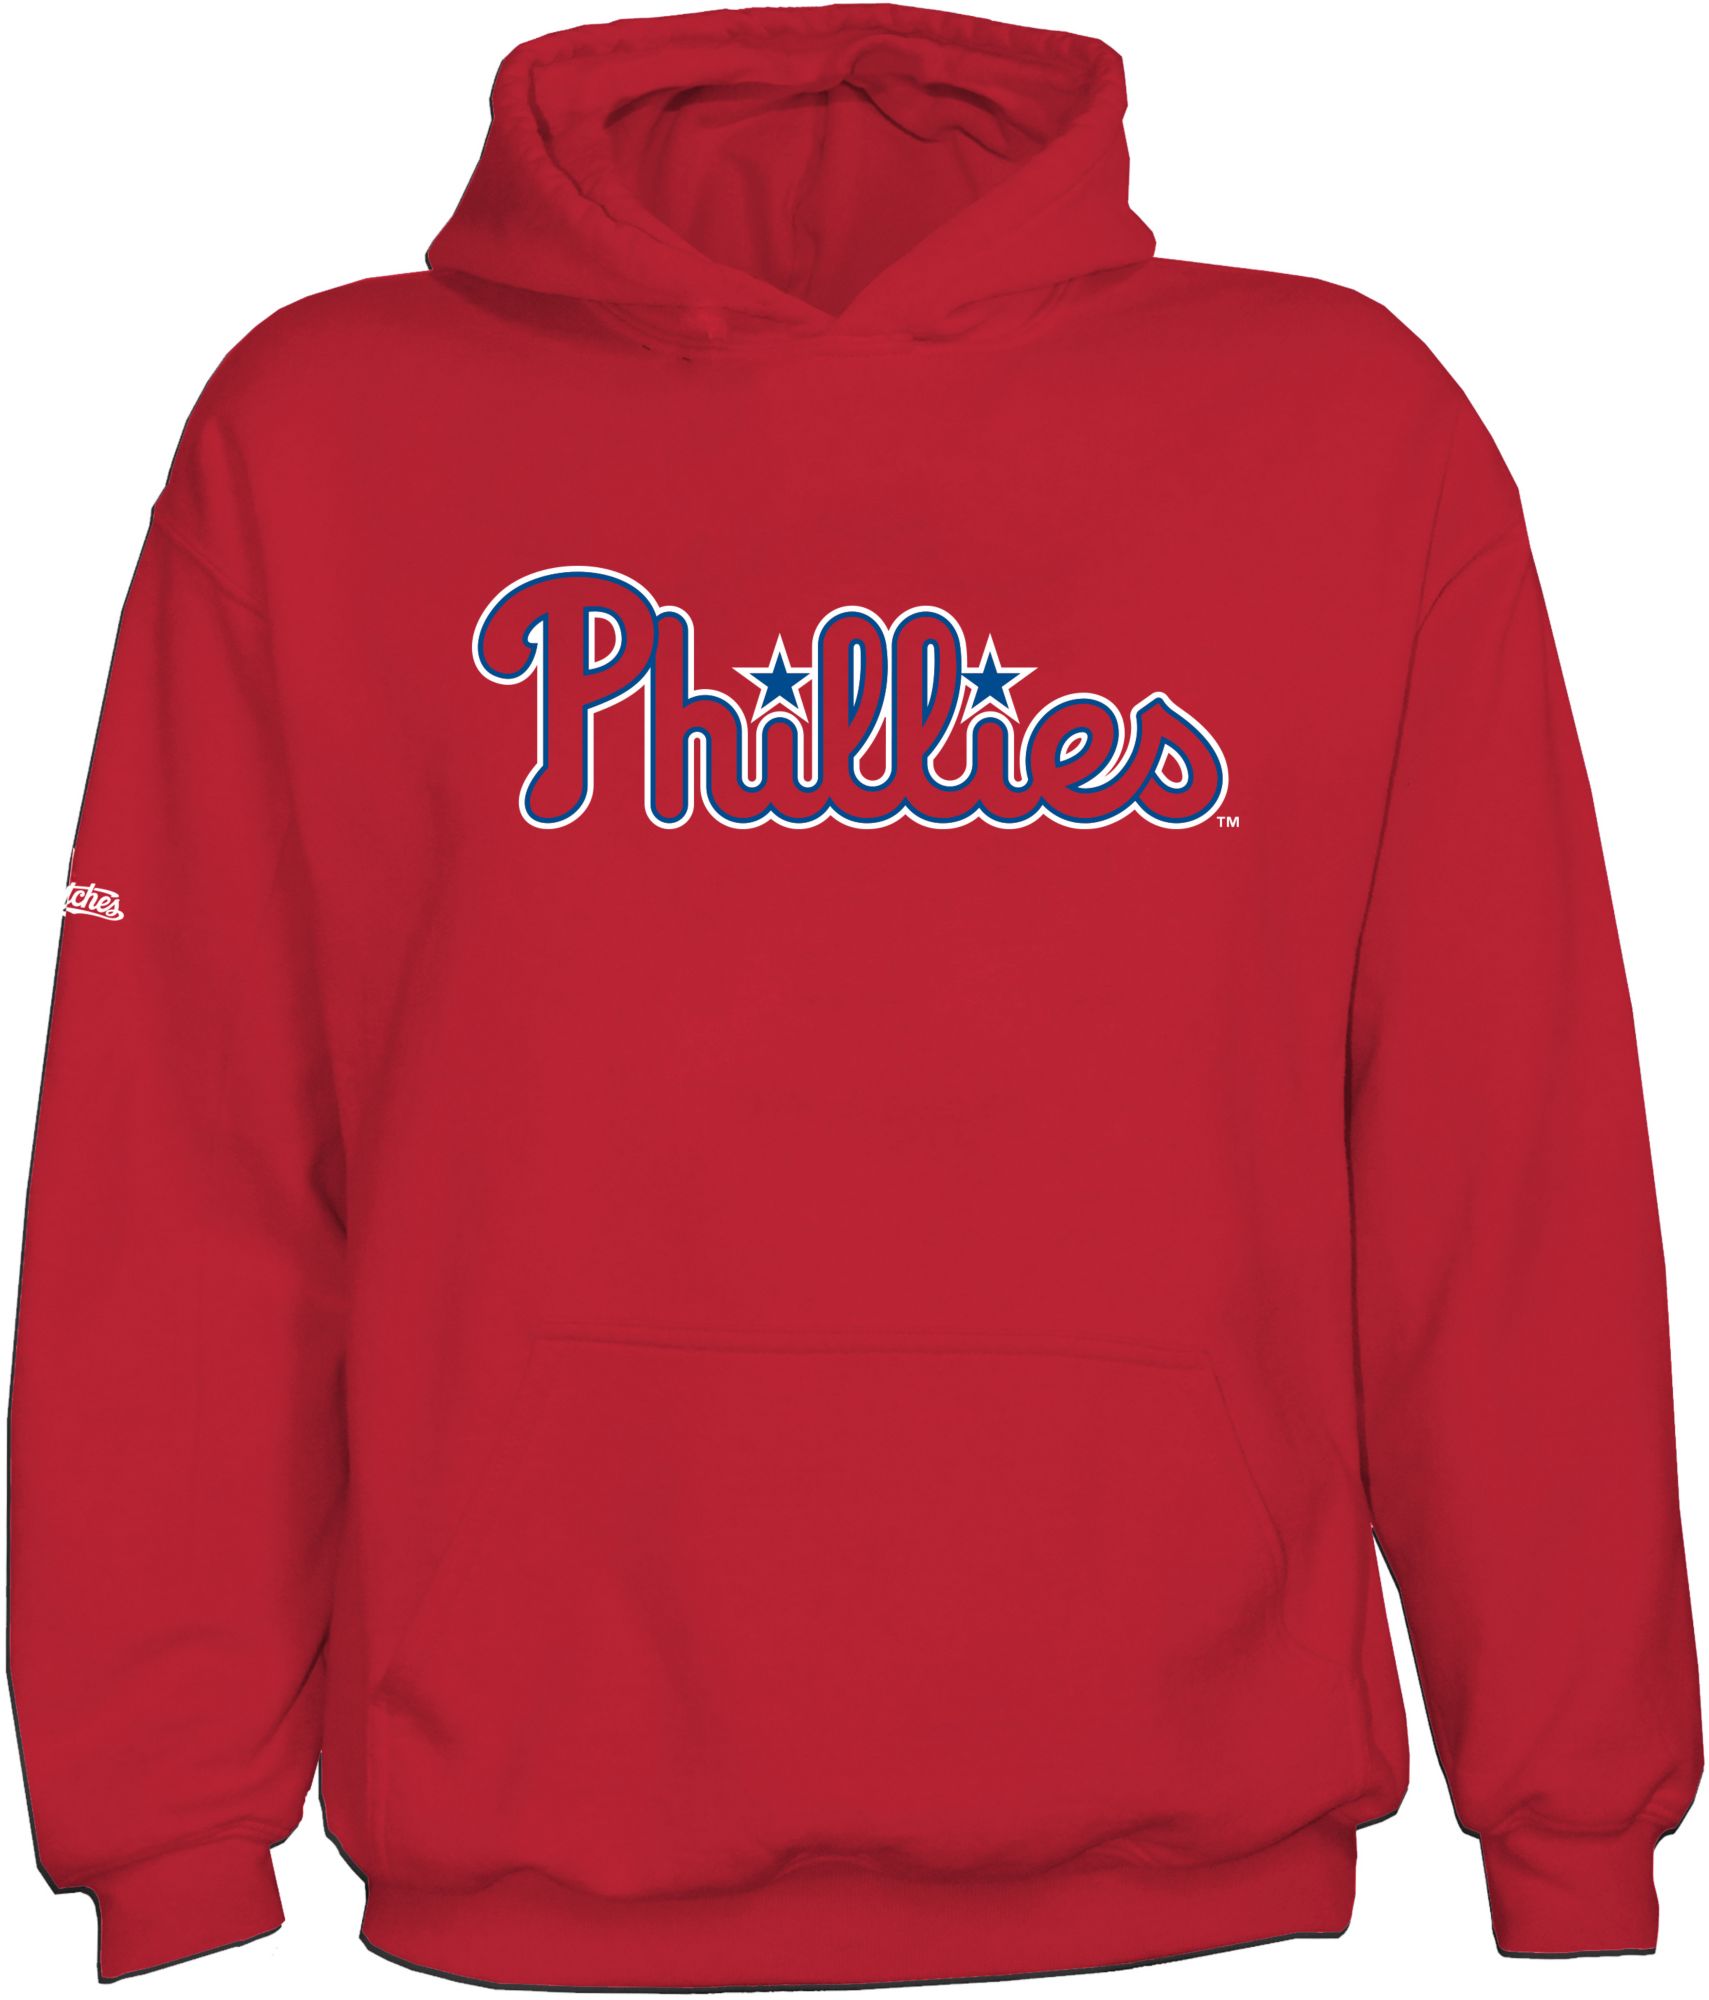 Philadelphia Phillies NLCS Apparel & Gear